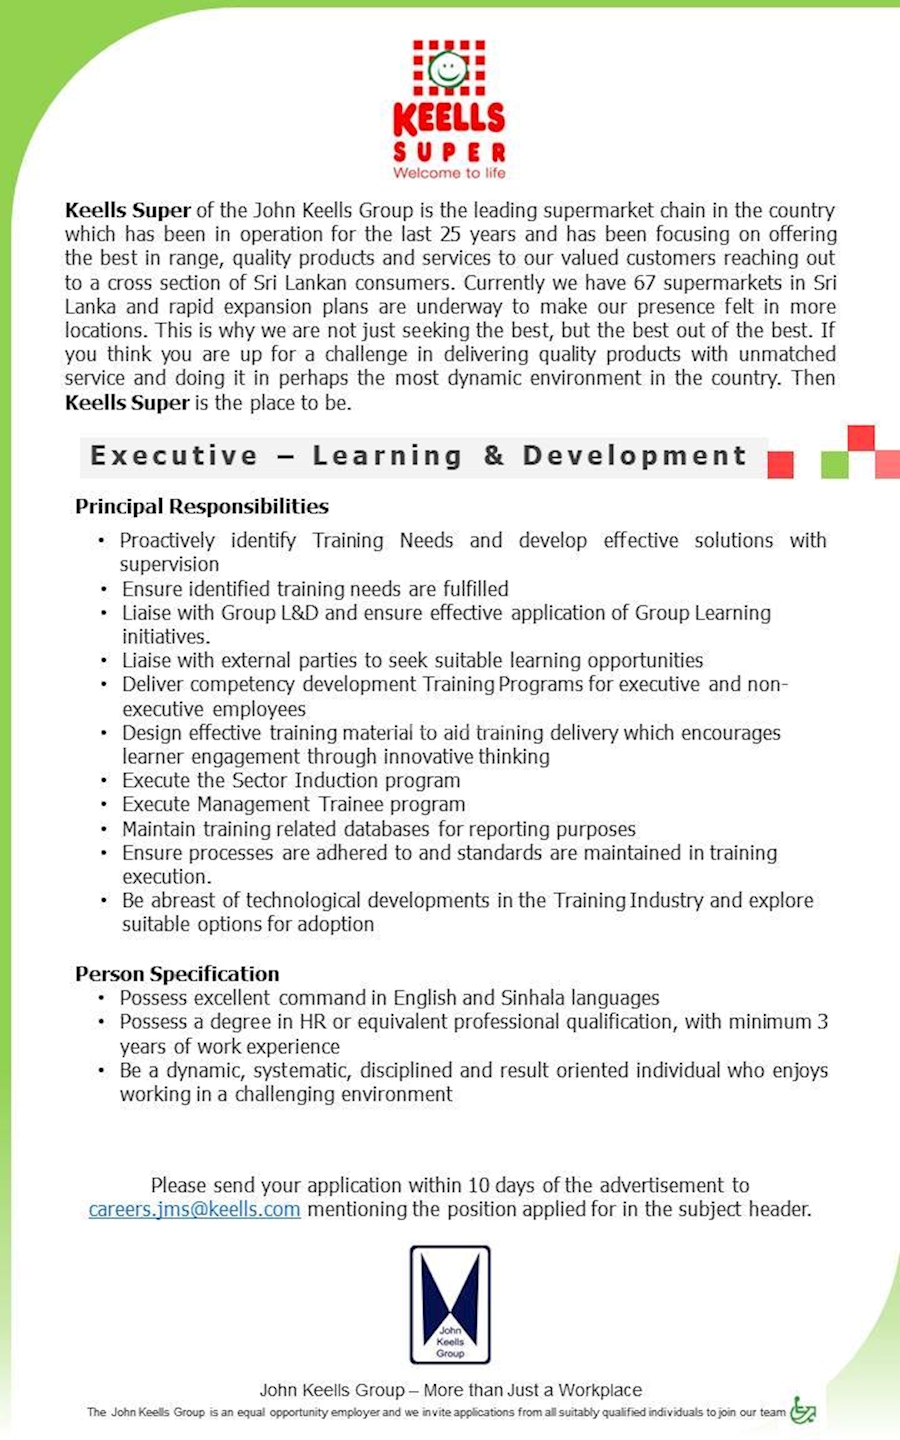 Executive - Learning & Development 